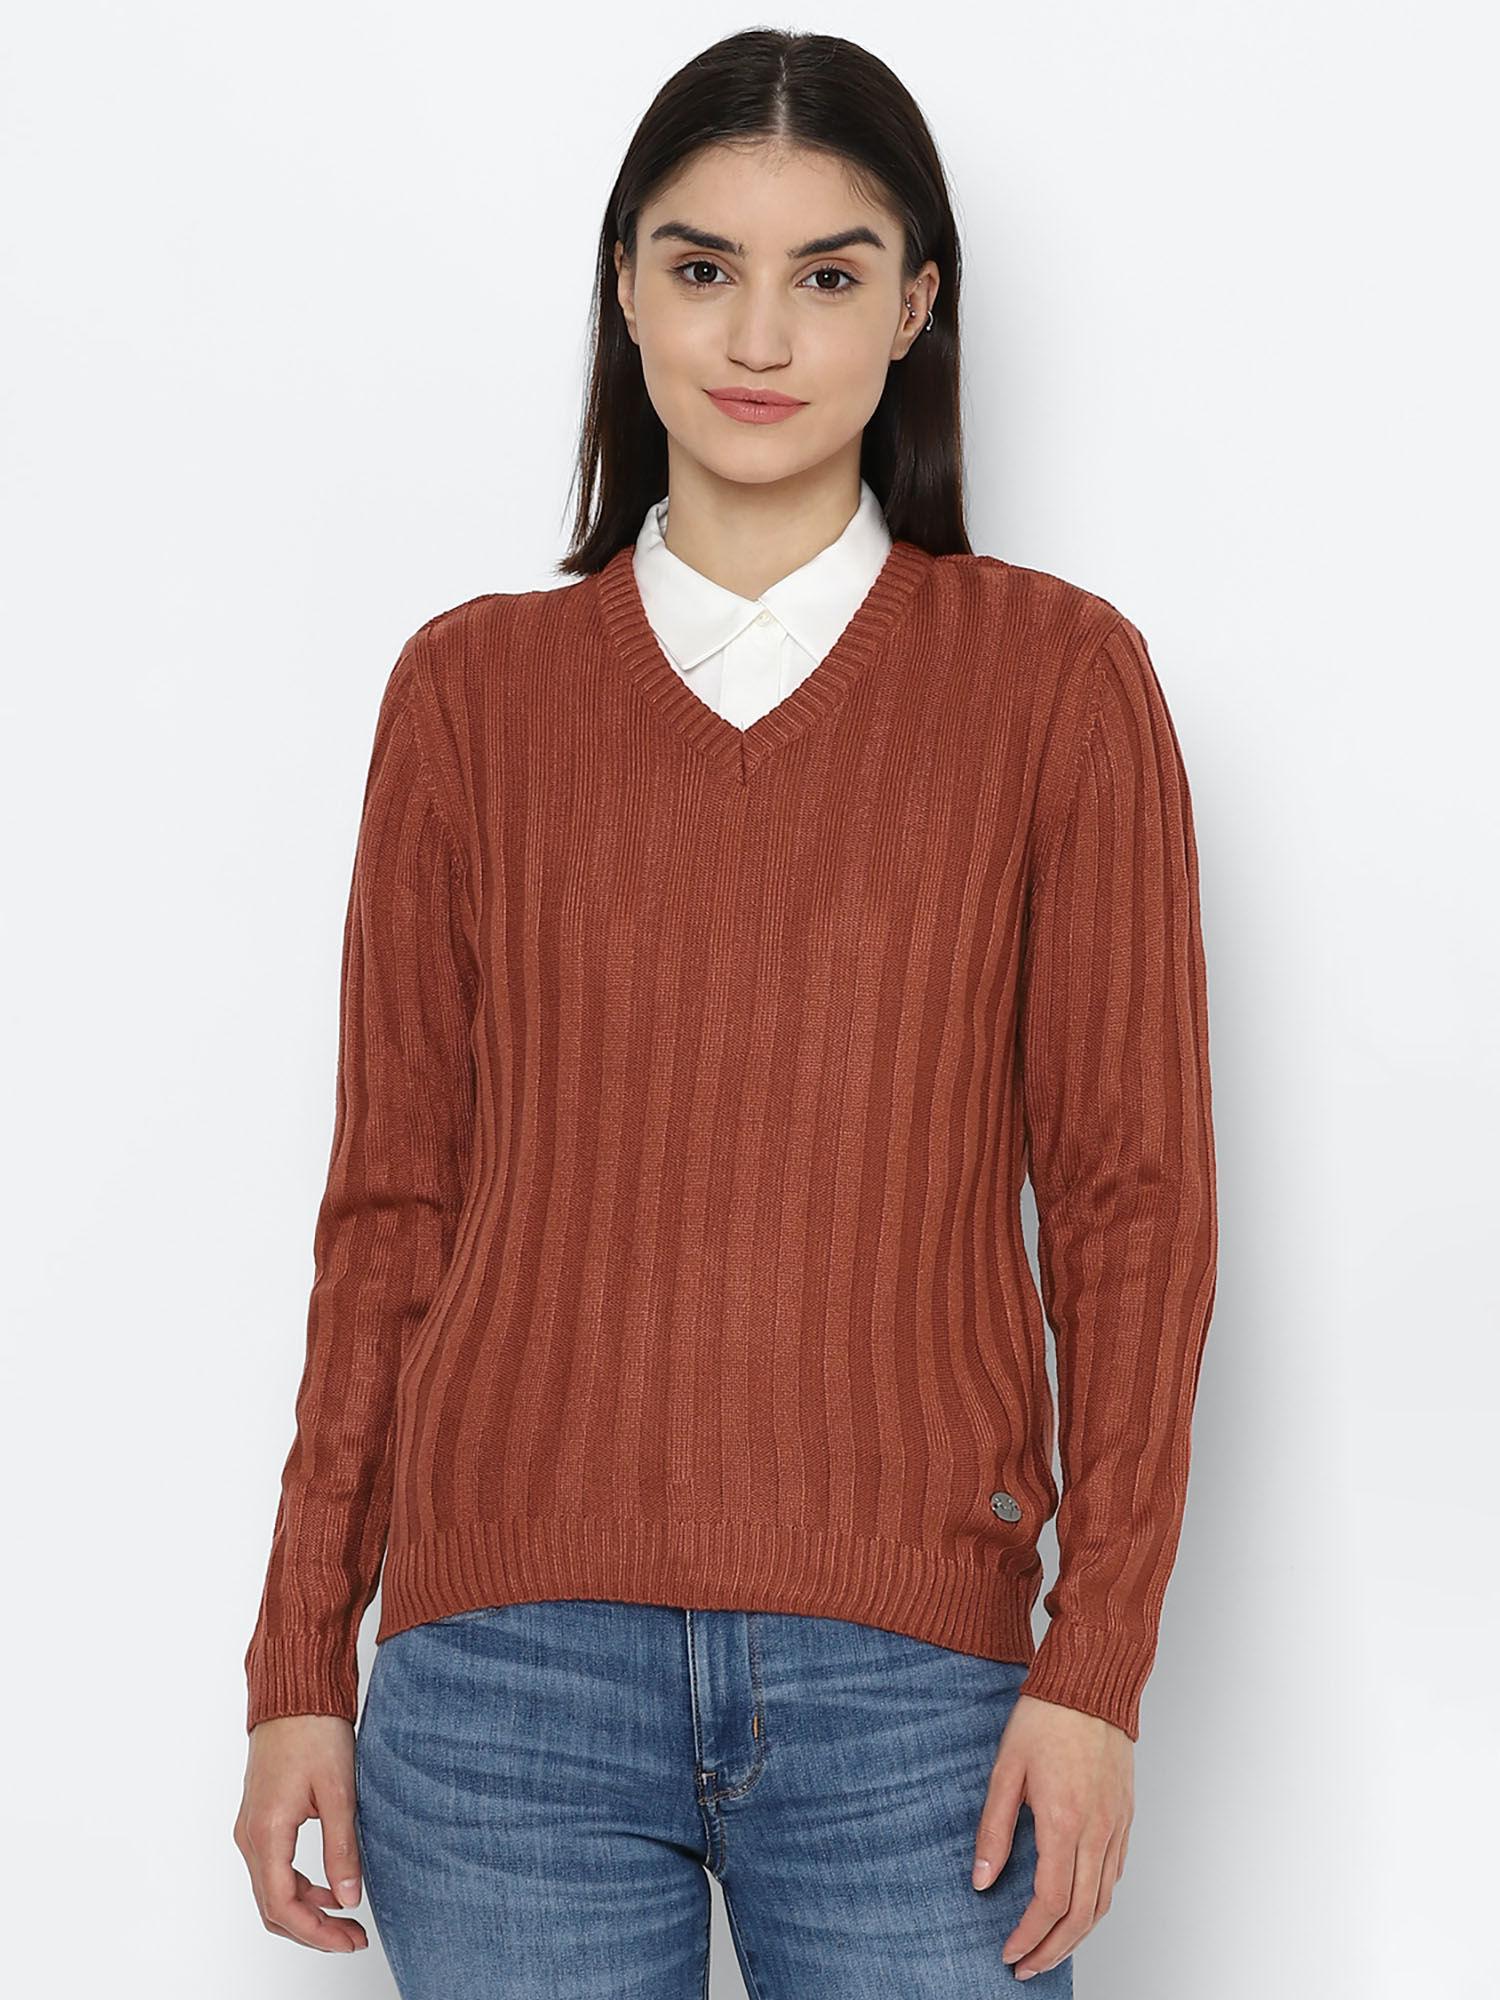 maroon sweater